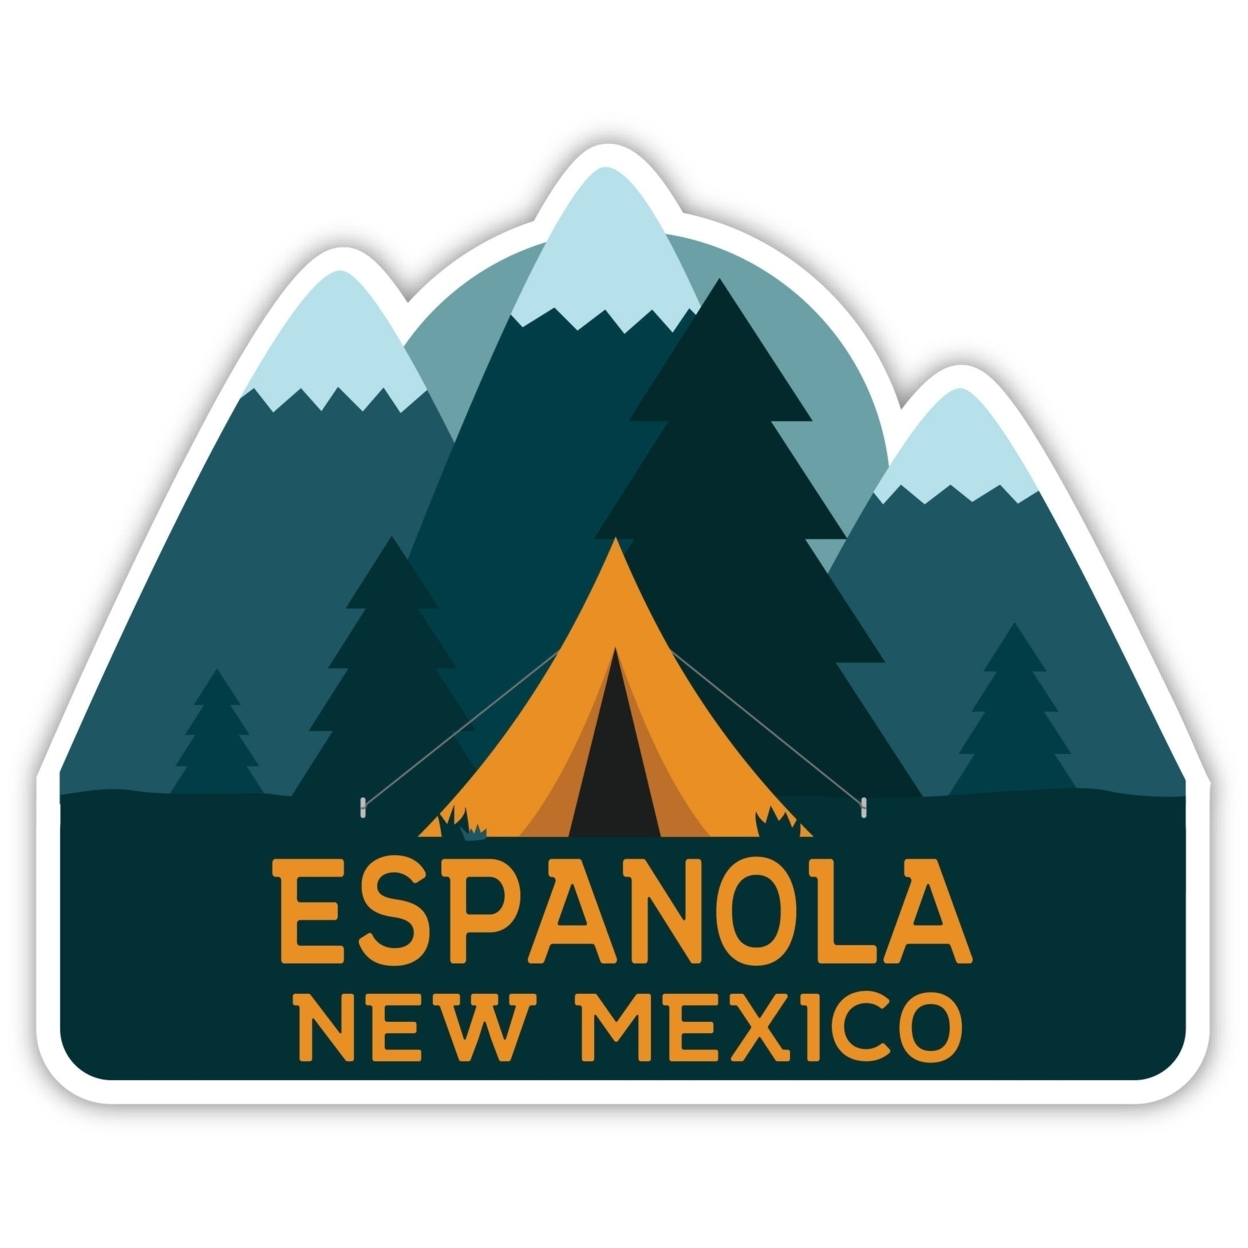 Espanola New Mexico Souvenir Decorative Stickers (Choose Theme And Size) - 4-Pack, 8-Inch, Tent